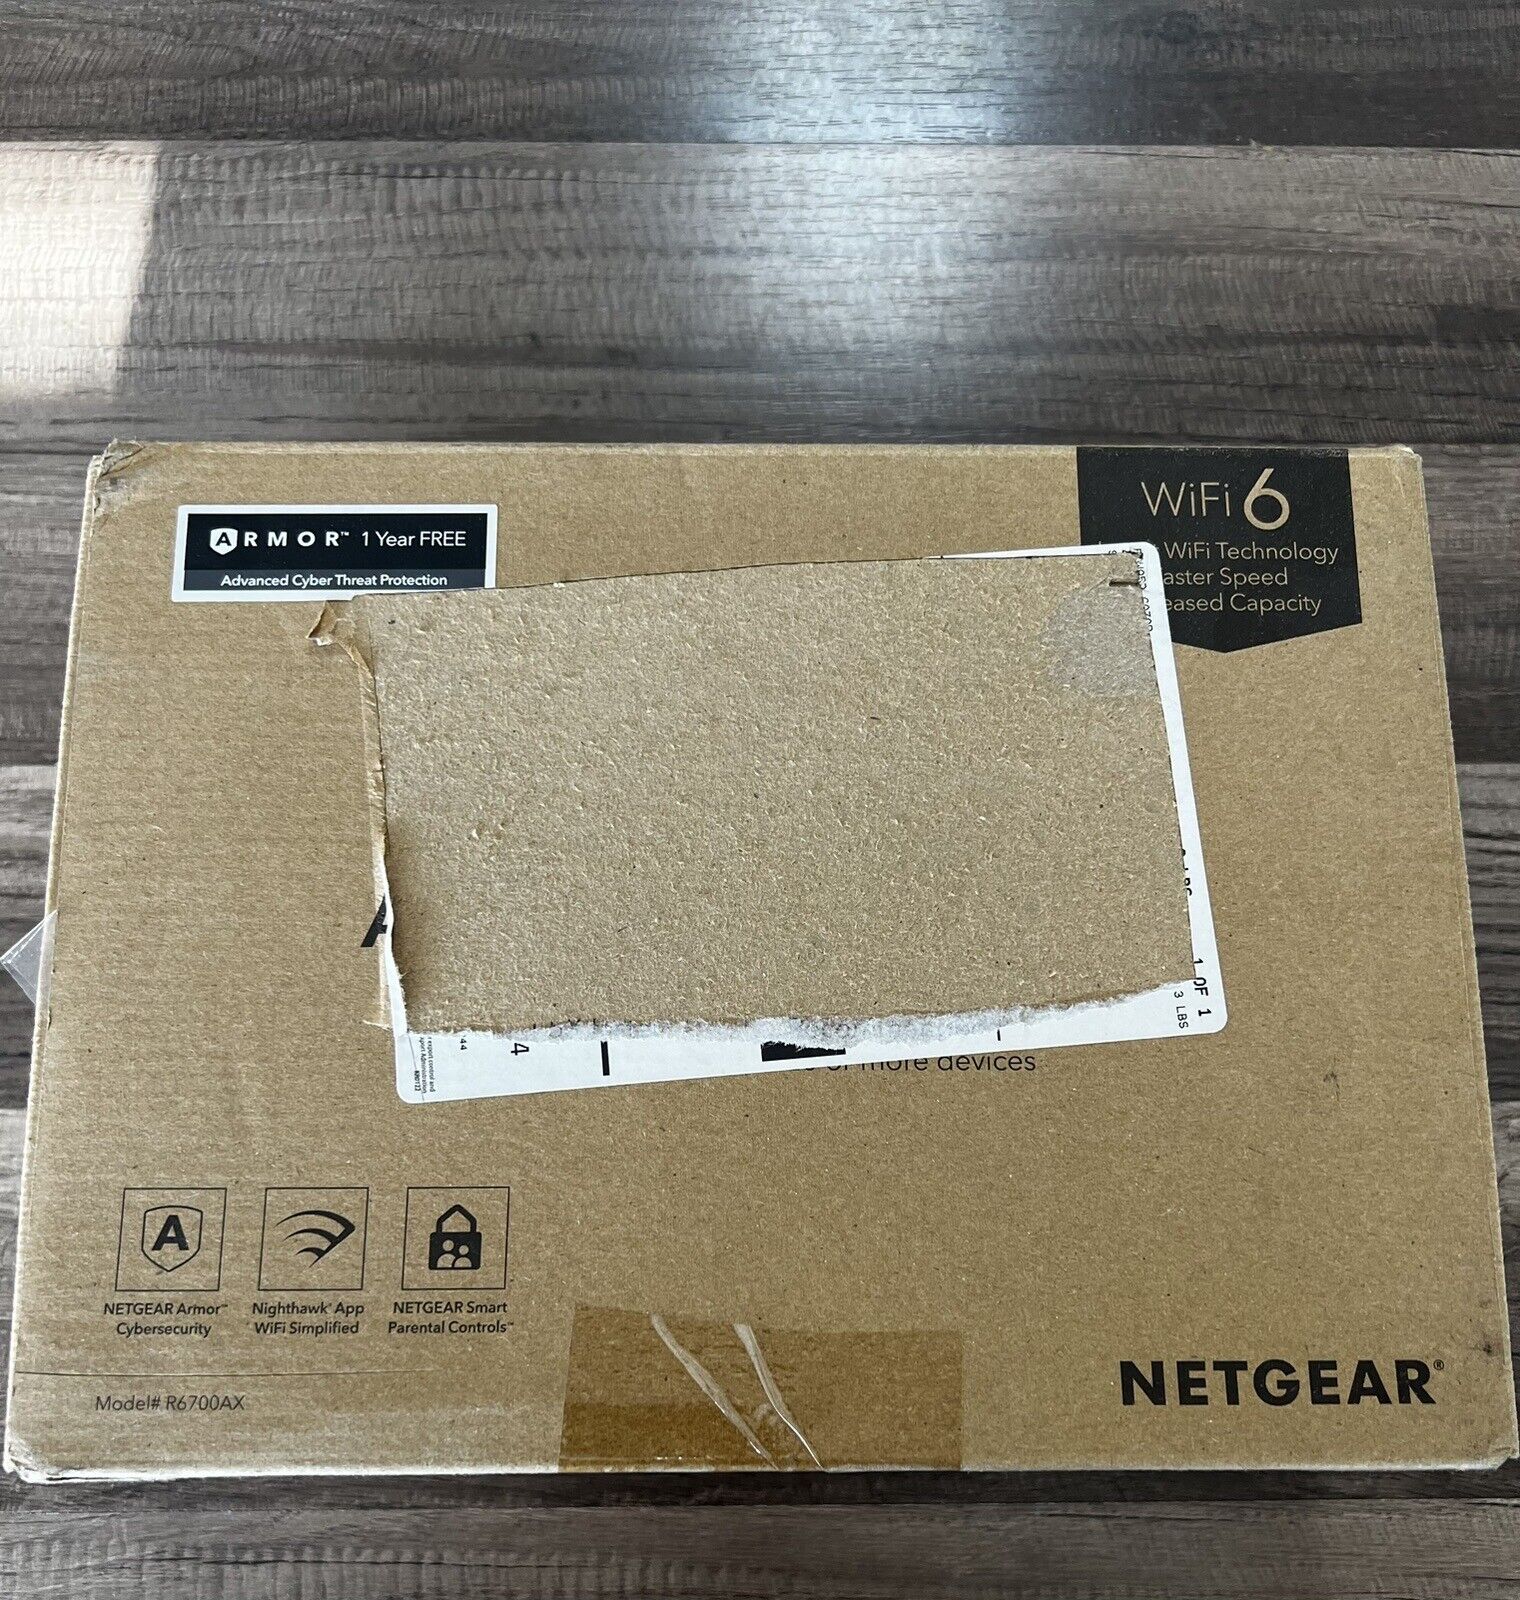 NETGEAR 4-Stream WiFi 6 Router (R6700AXS) R